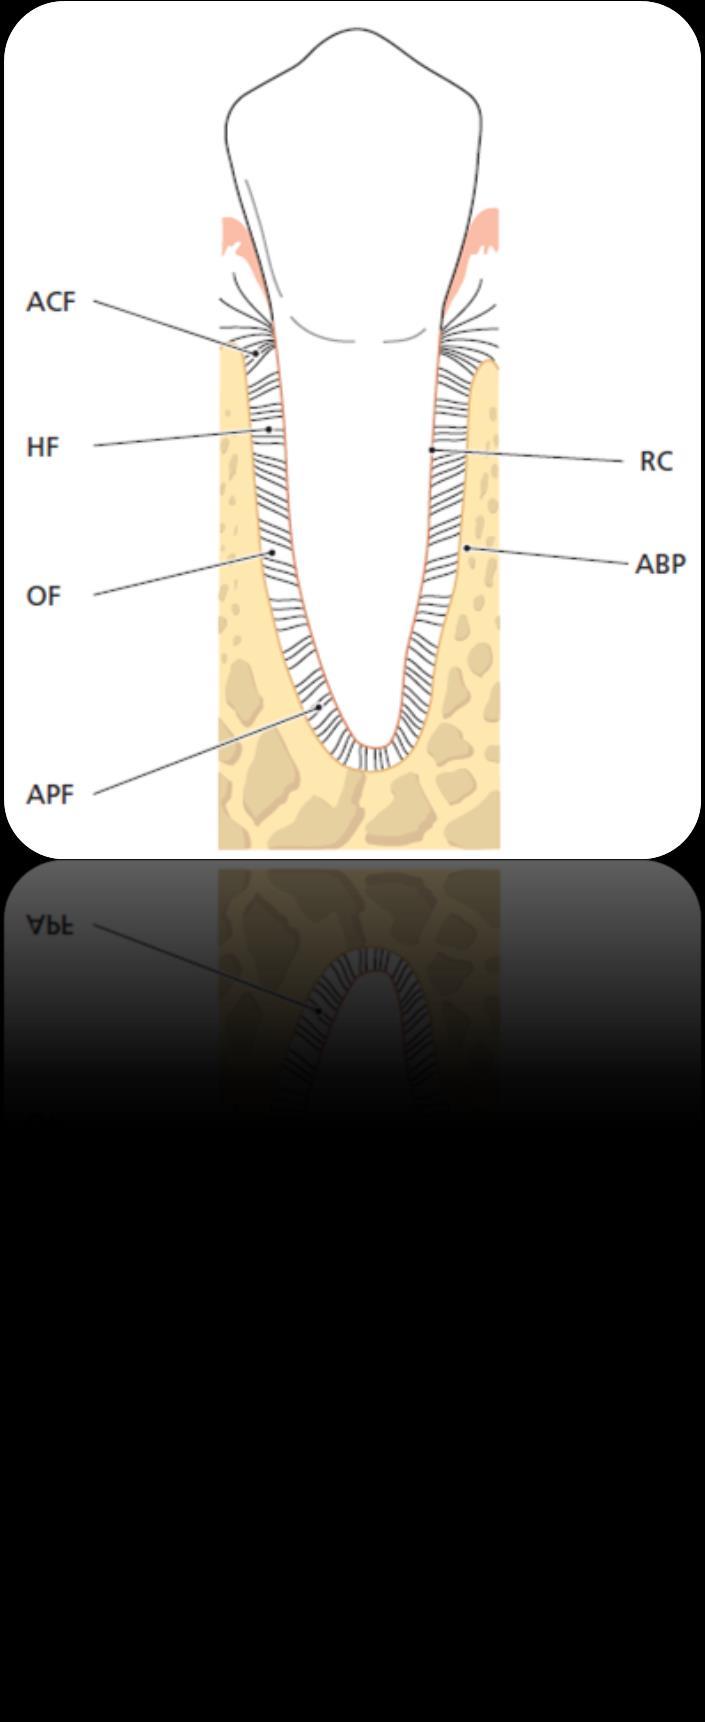 Fasersystem Alveolar crest fibers